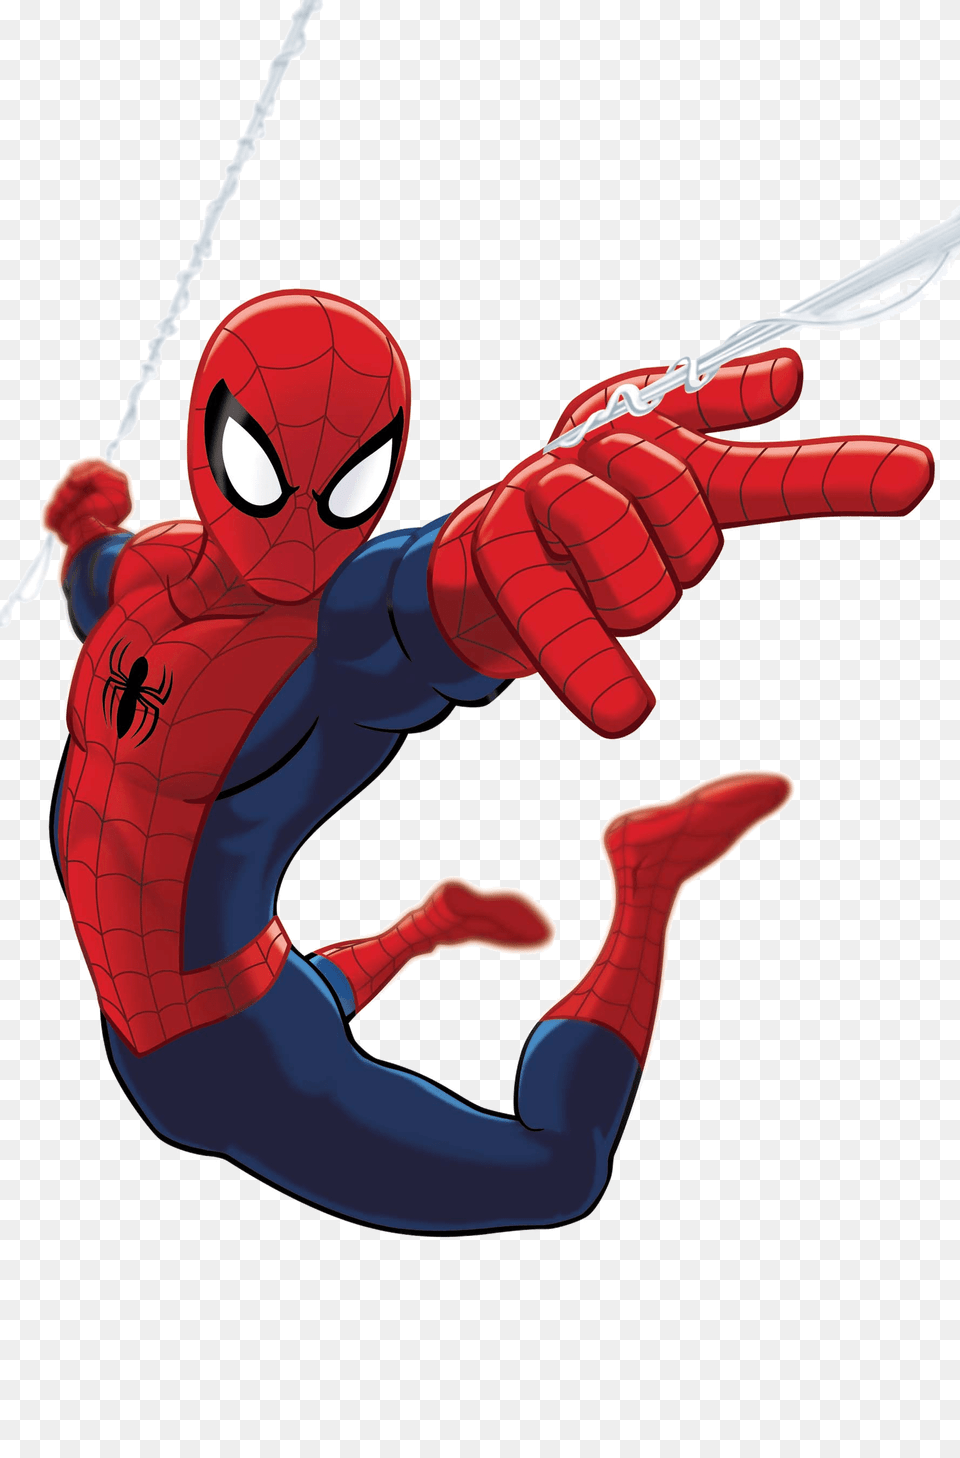 Spider Man, Dynamite, Weapon, Smoke Pipe Png Image